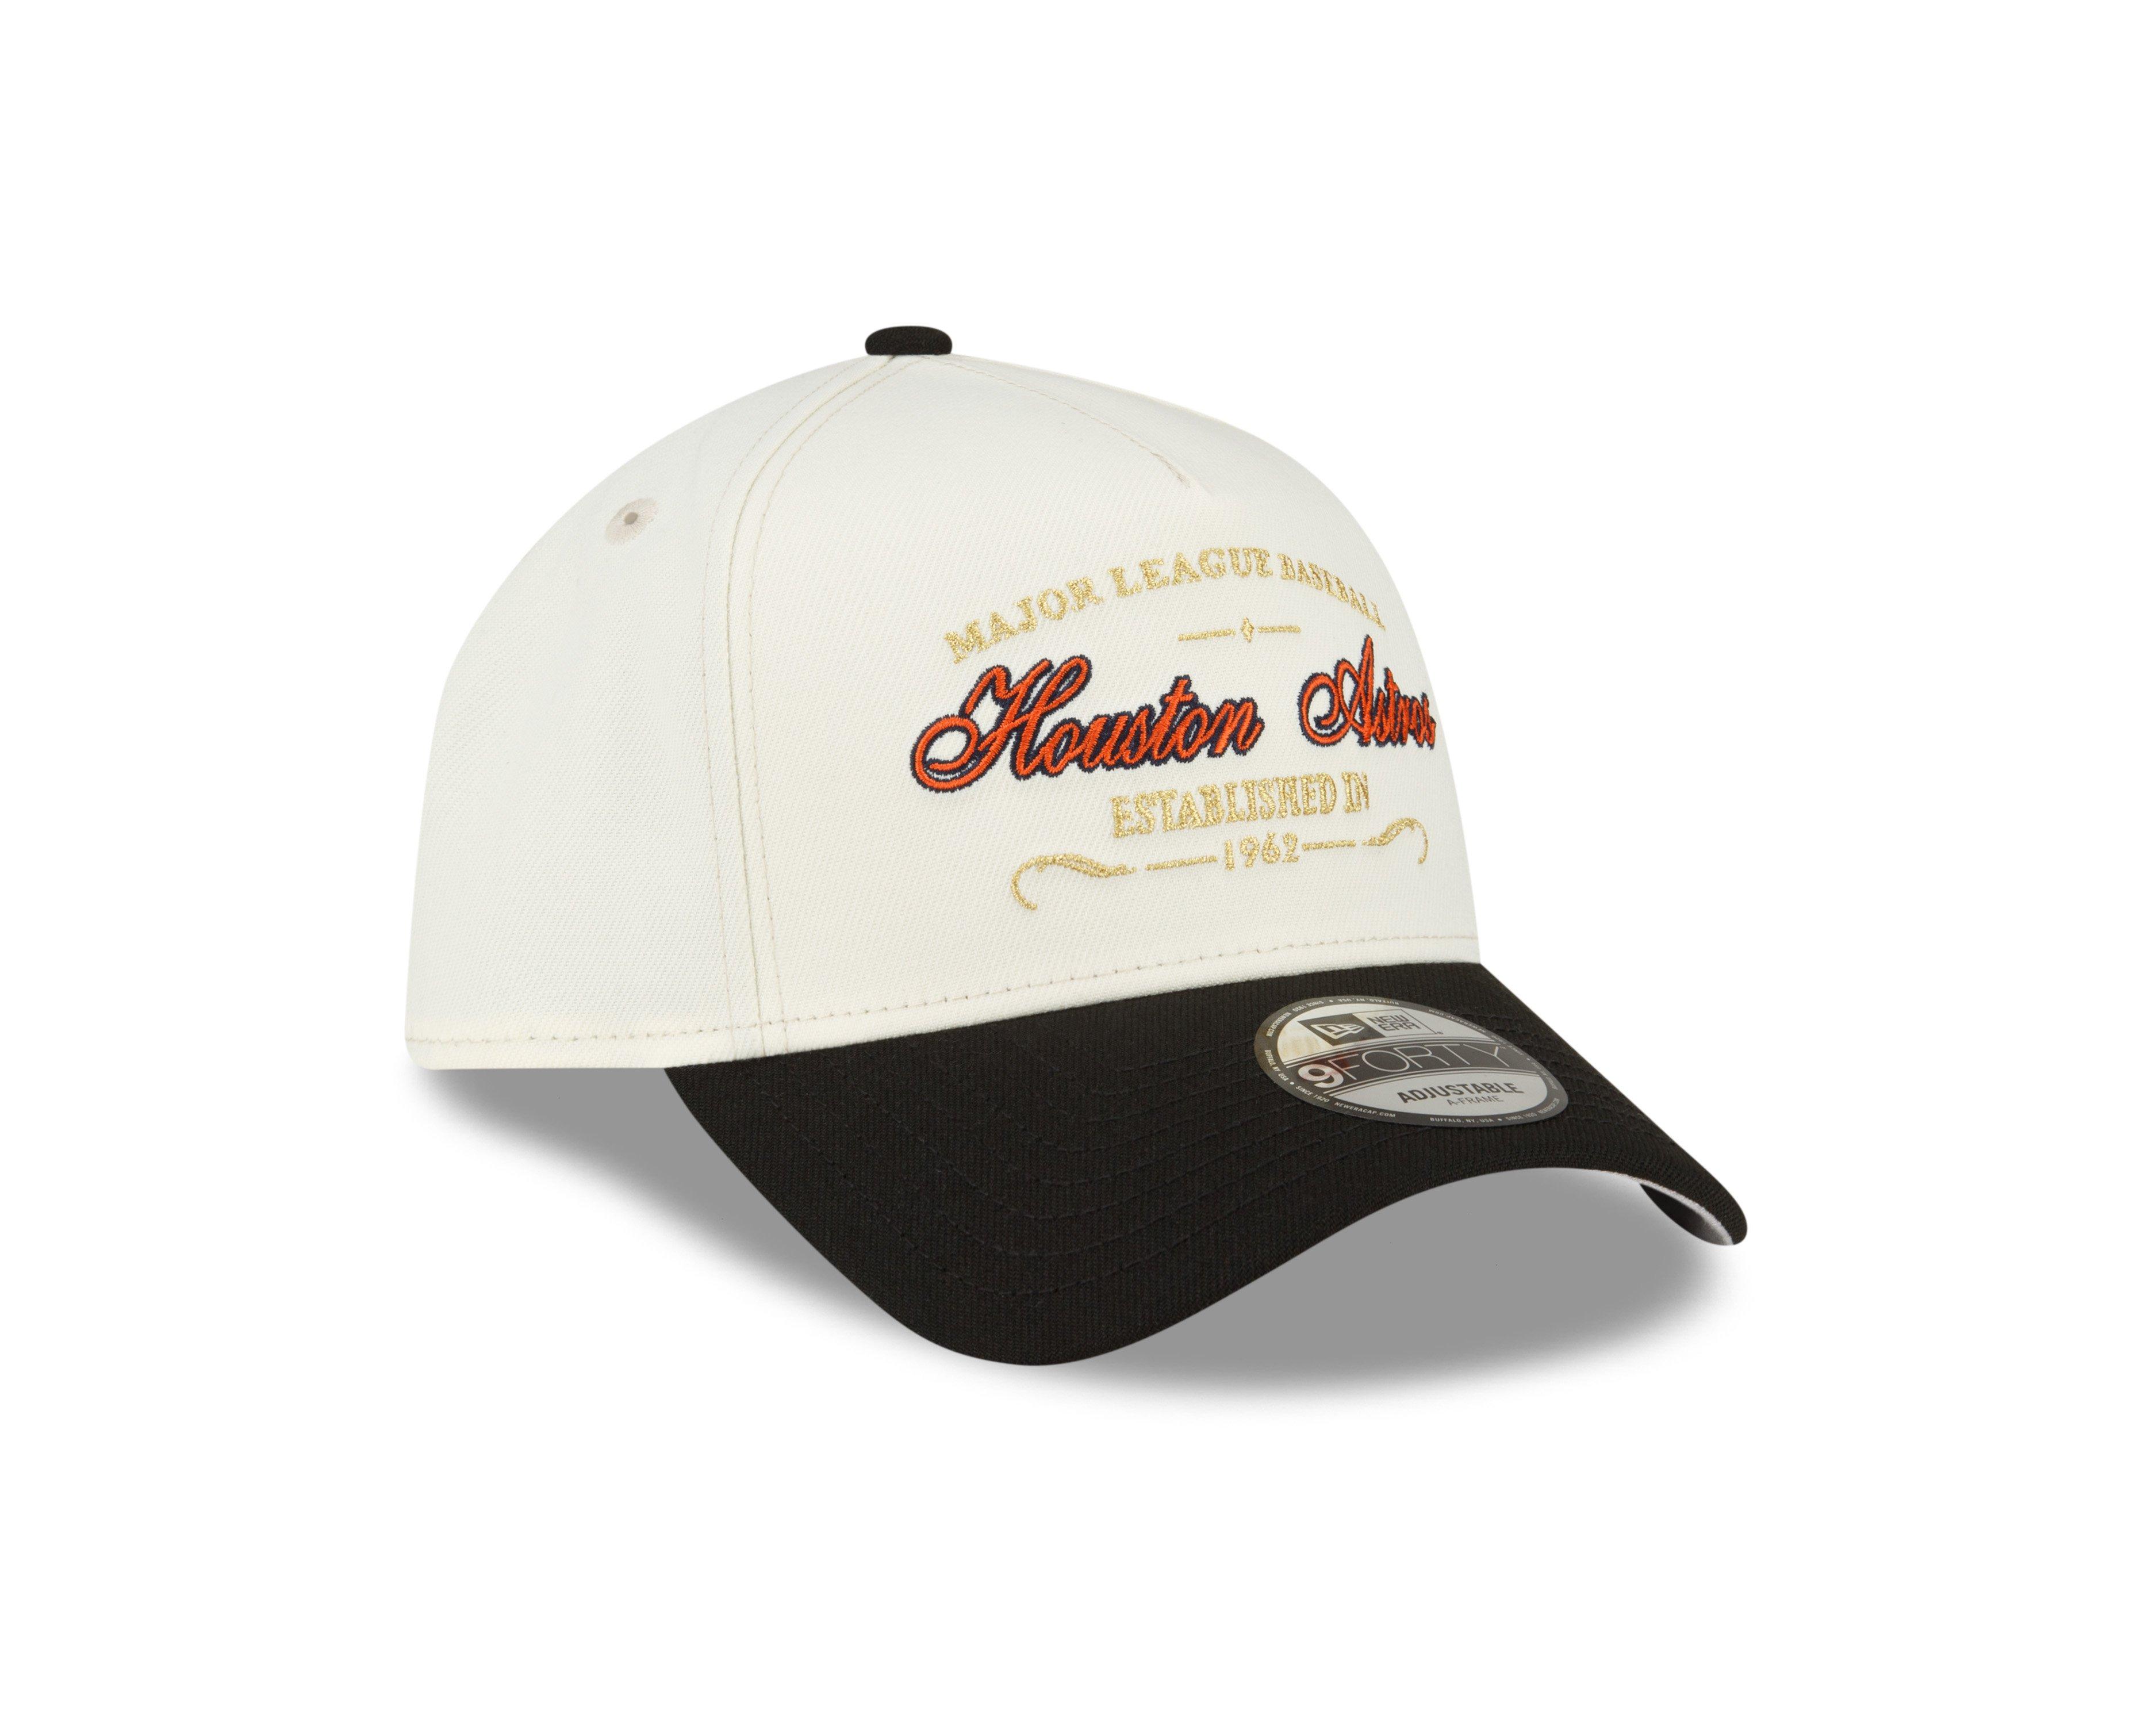 Houston Baseball Team Established 1962 Hat Patch Embroidered 